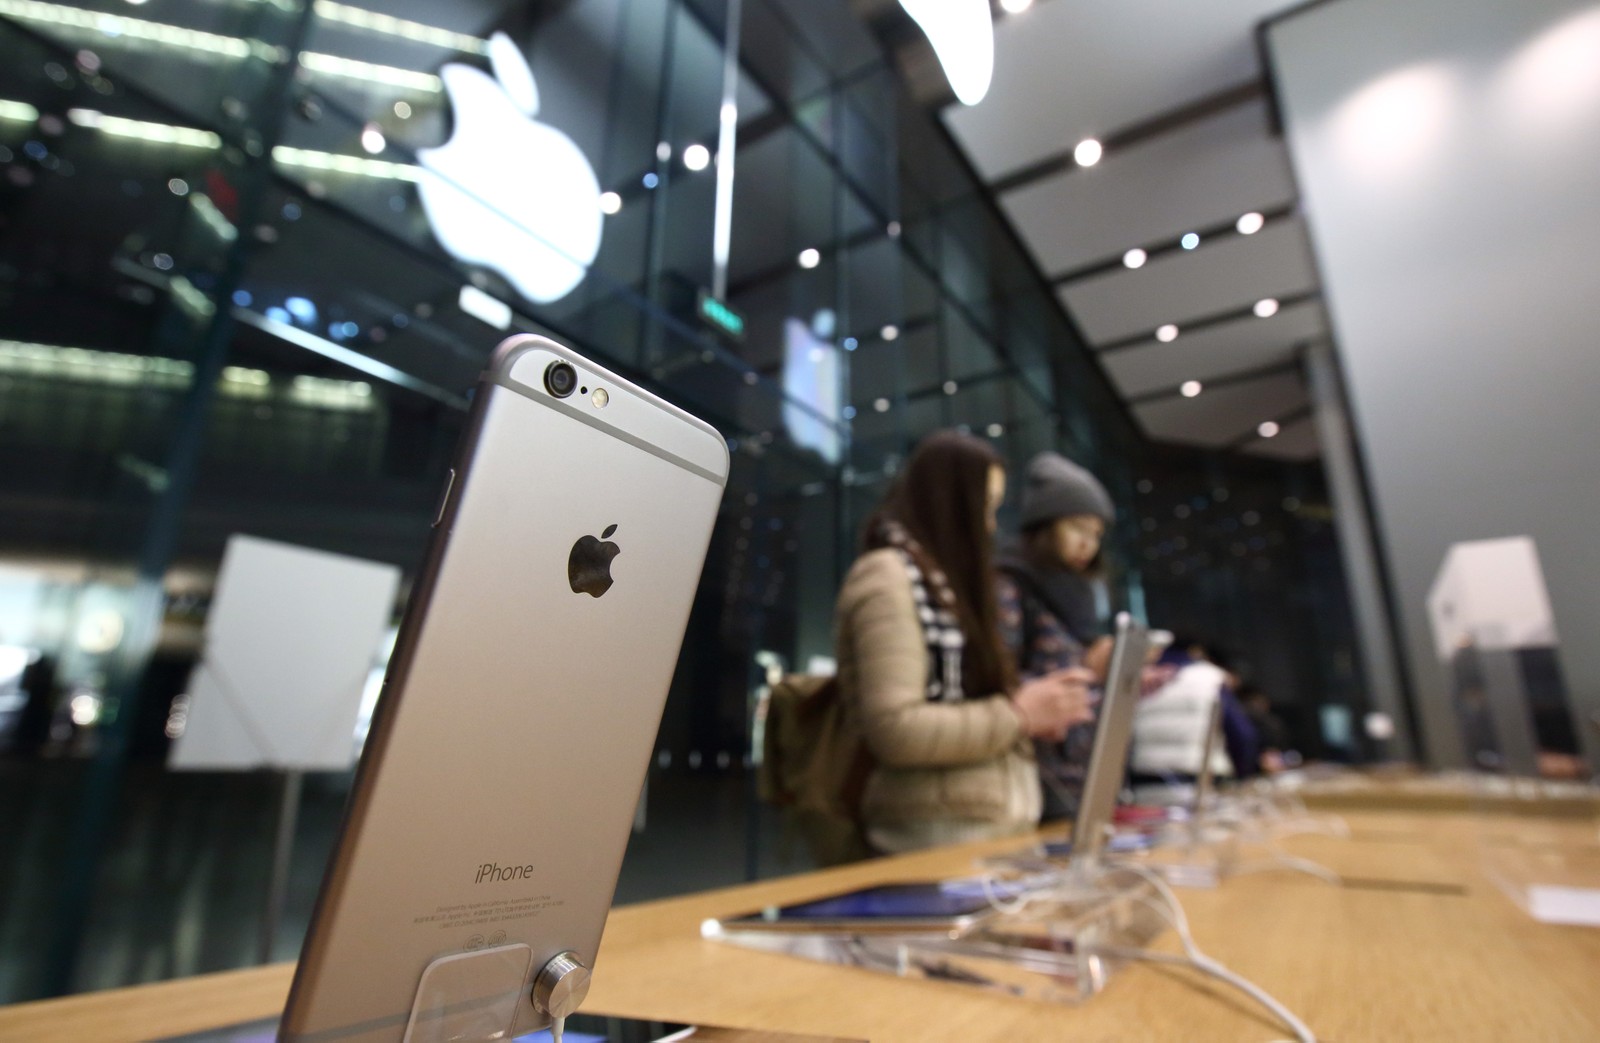 iPhone 6, lançado em 2014 — Foto: Tomohiro Ohsumi / Bloomberg